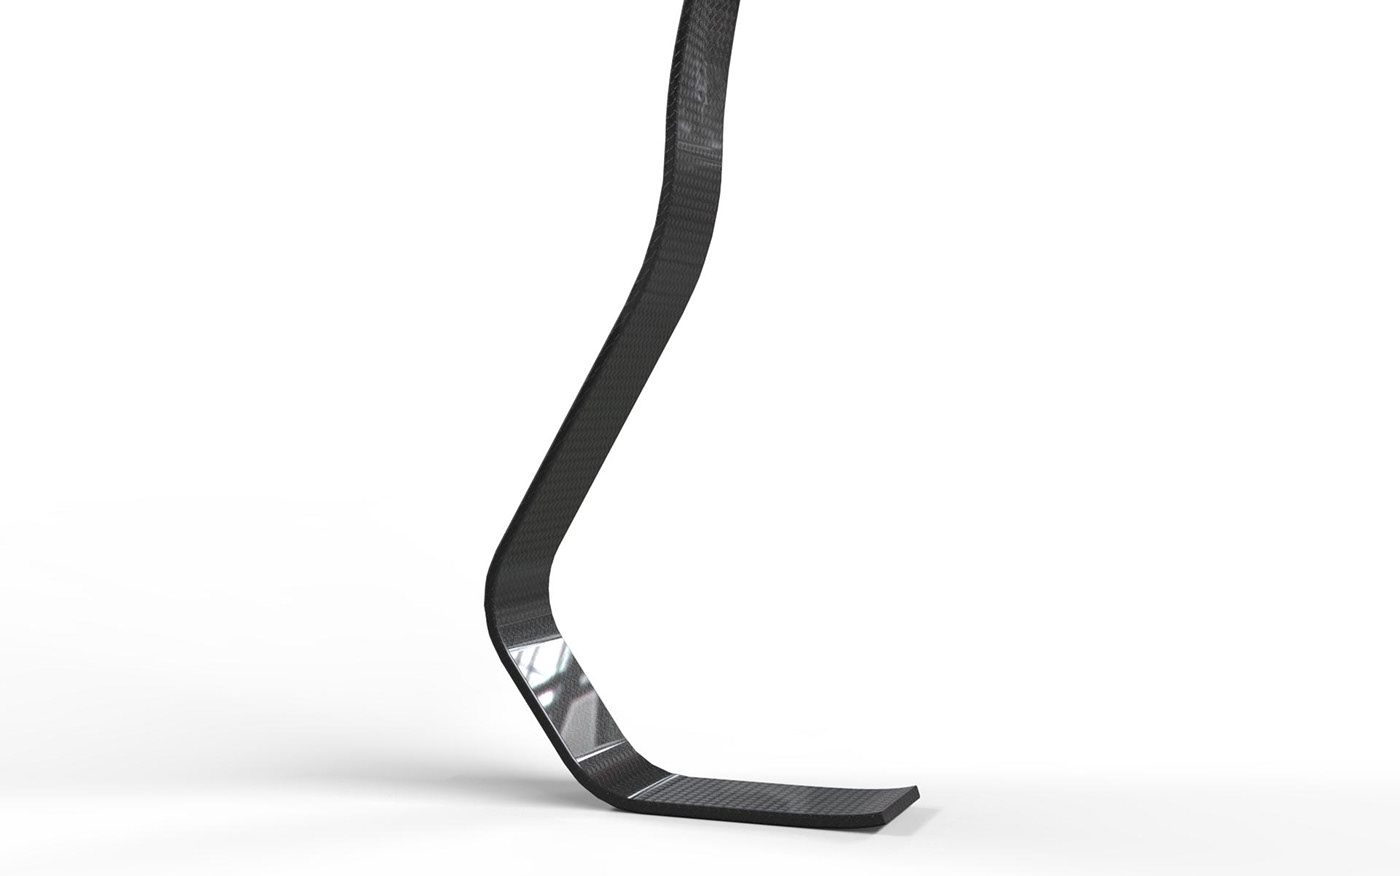 bluethooth crutch design freezing Health medical parkinson product design  walk walking stick